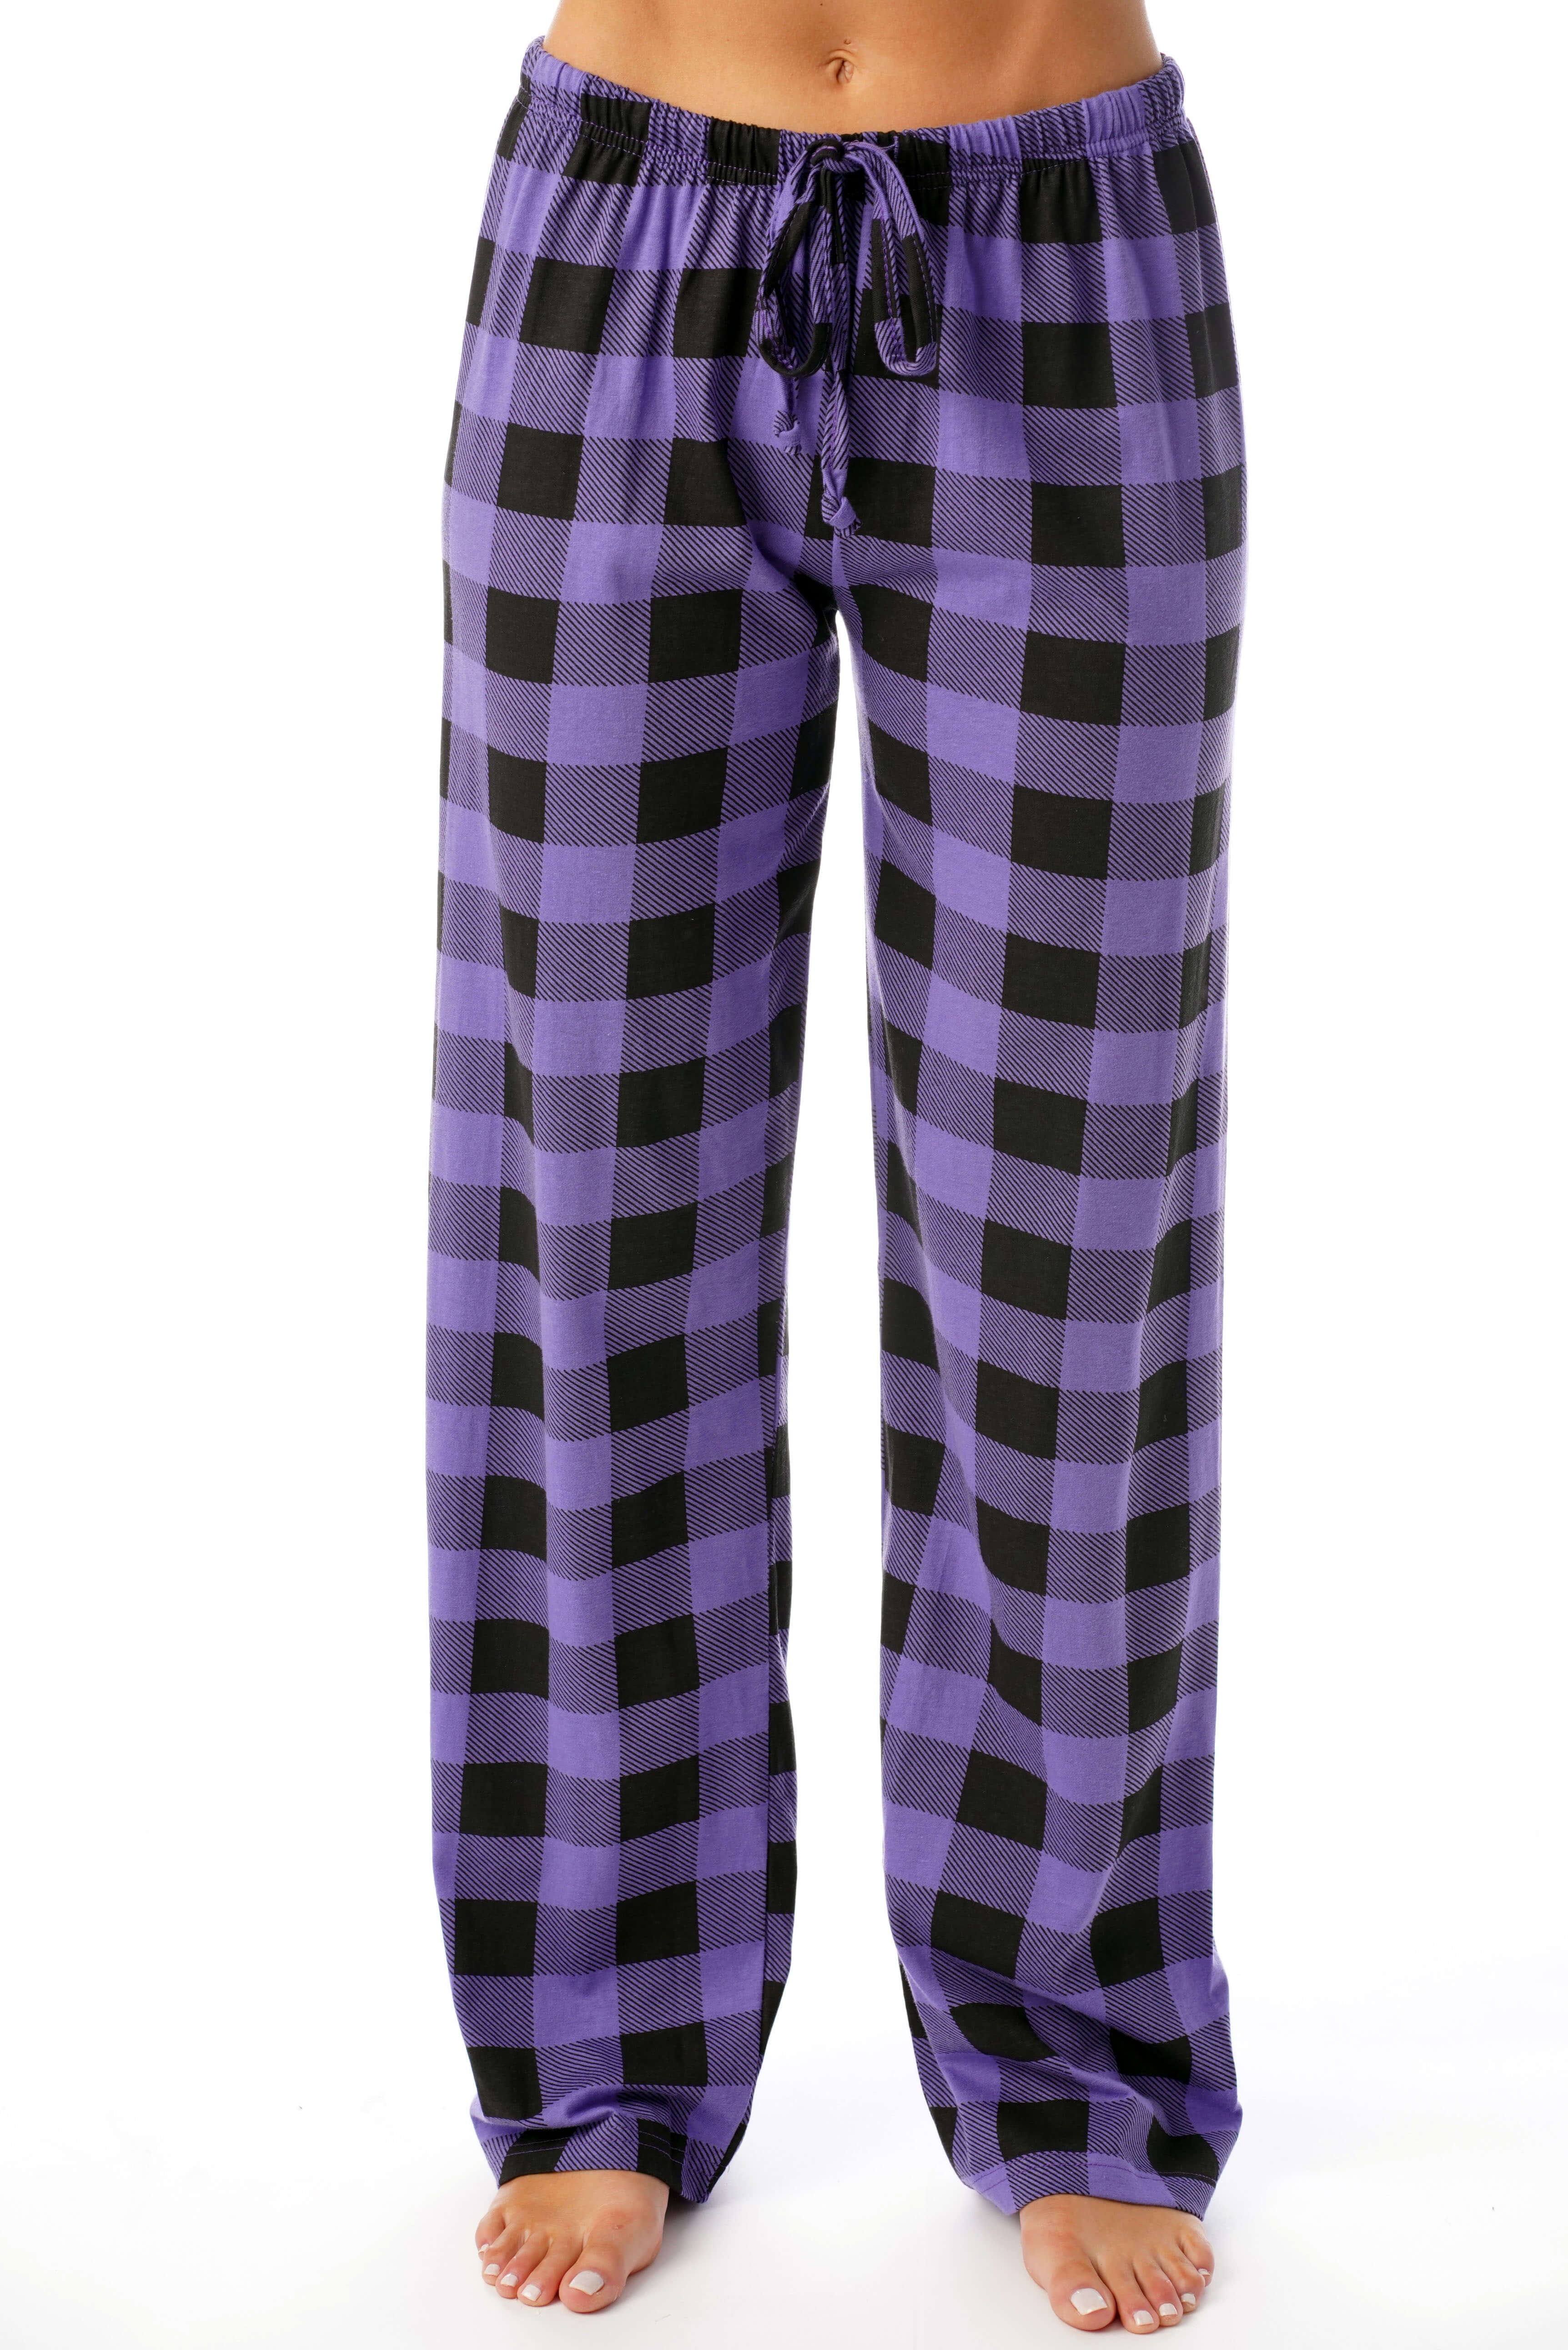 Just Love Women Buffalo Plaid Pajama Pants Sleepwear (Purple Black Buffalo Plaid, 2X)